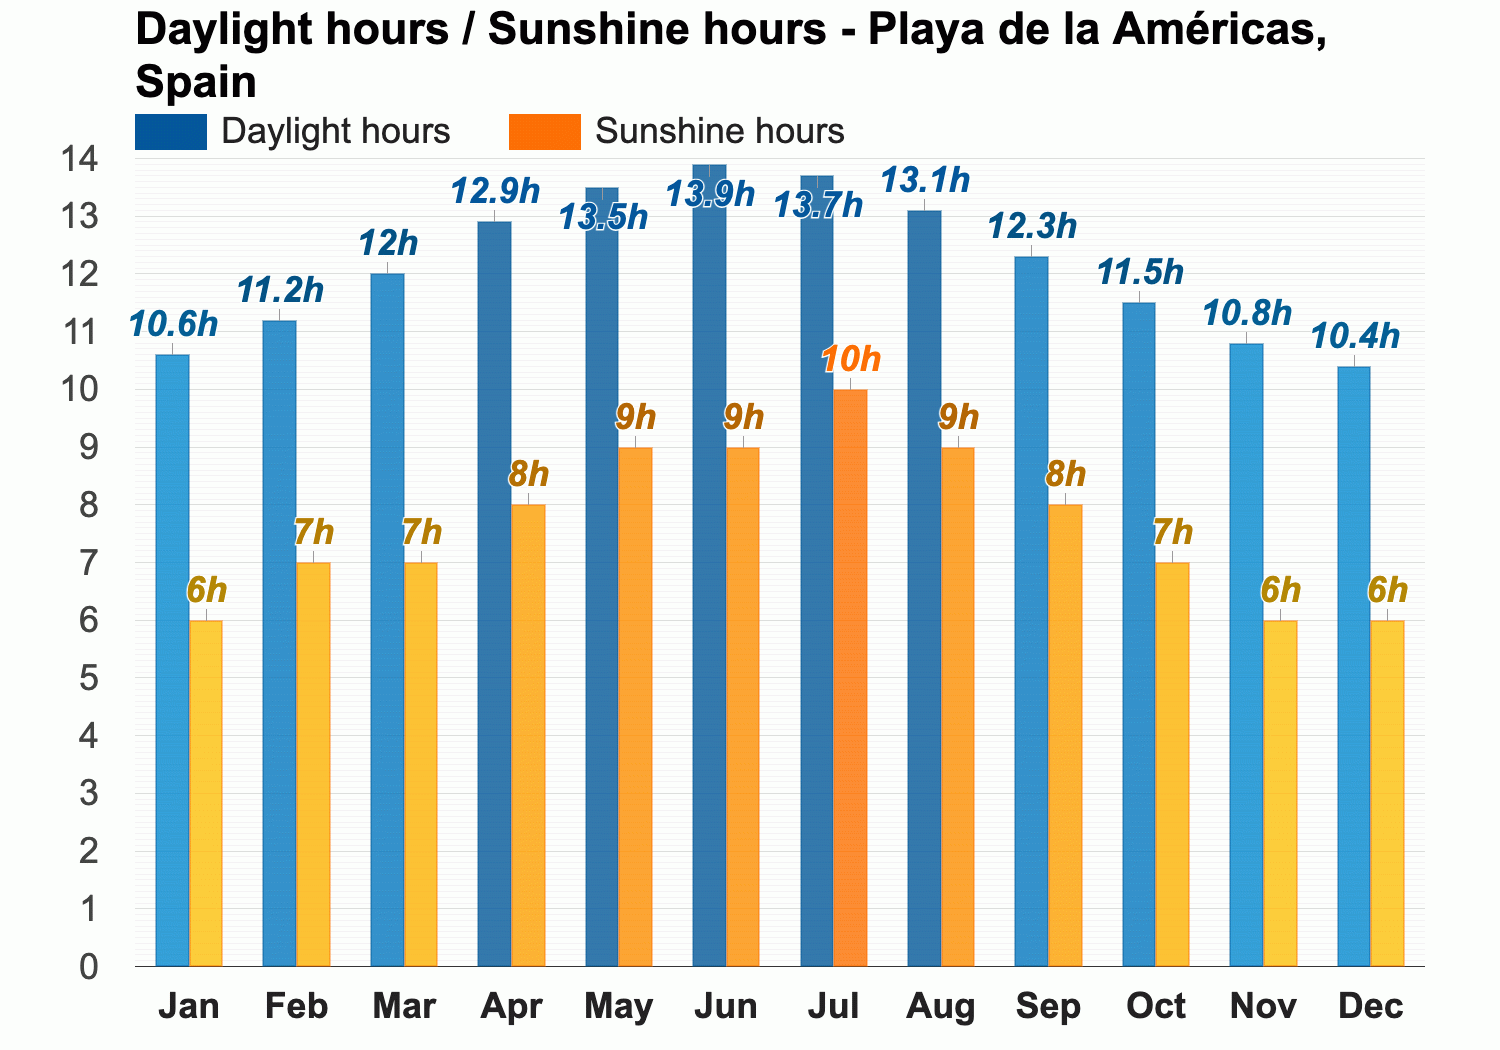 Playa de la Américas, Spain - March weather forecast and climate  information | Weather Atlas